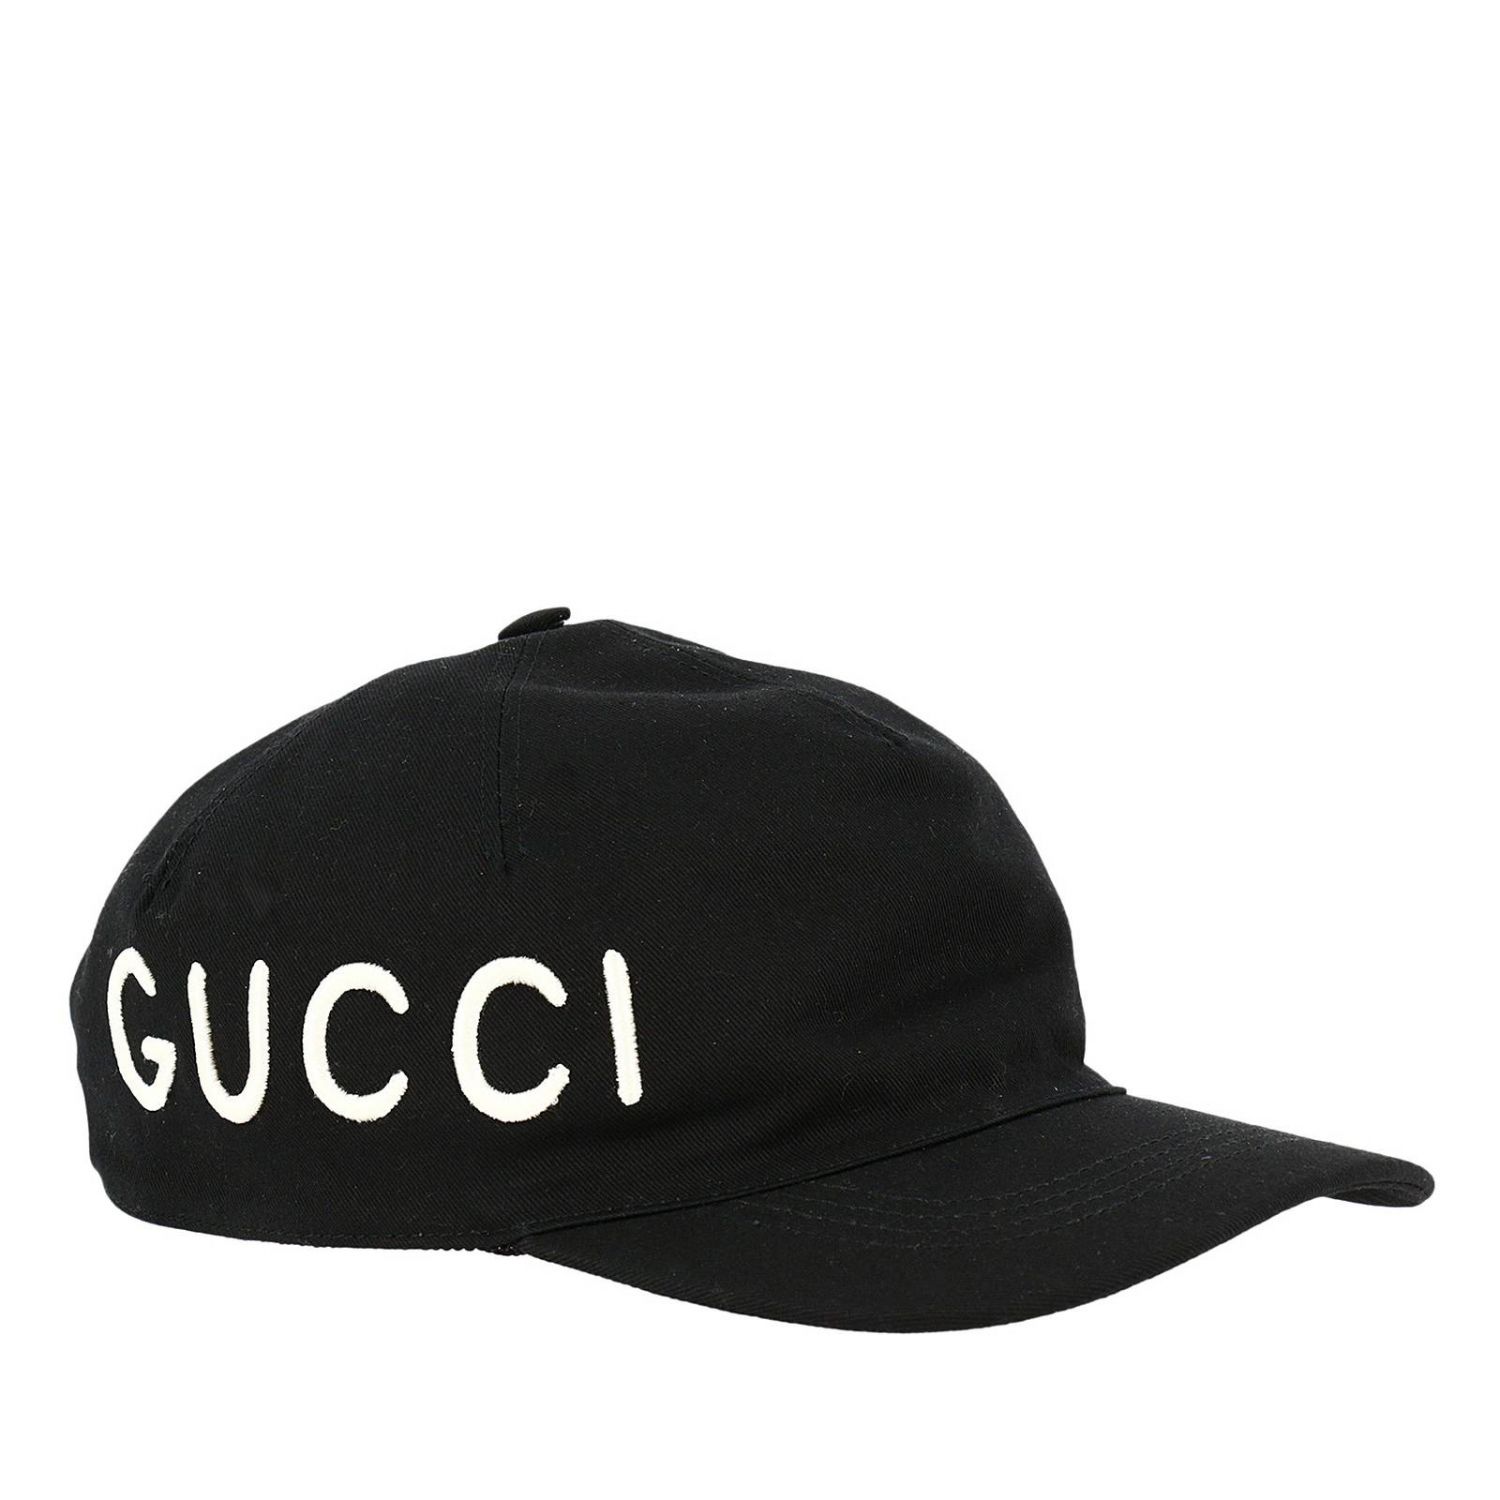 GUCCI: Hat men | Hat Gucci Men Black | Hat Gucci 478948 3HD05 GIGLIO.COM